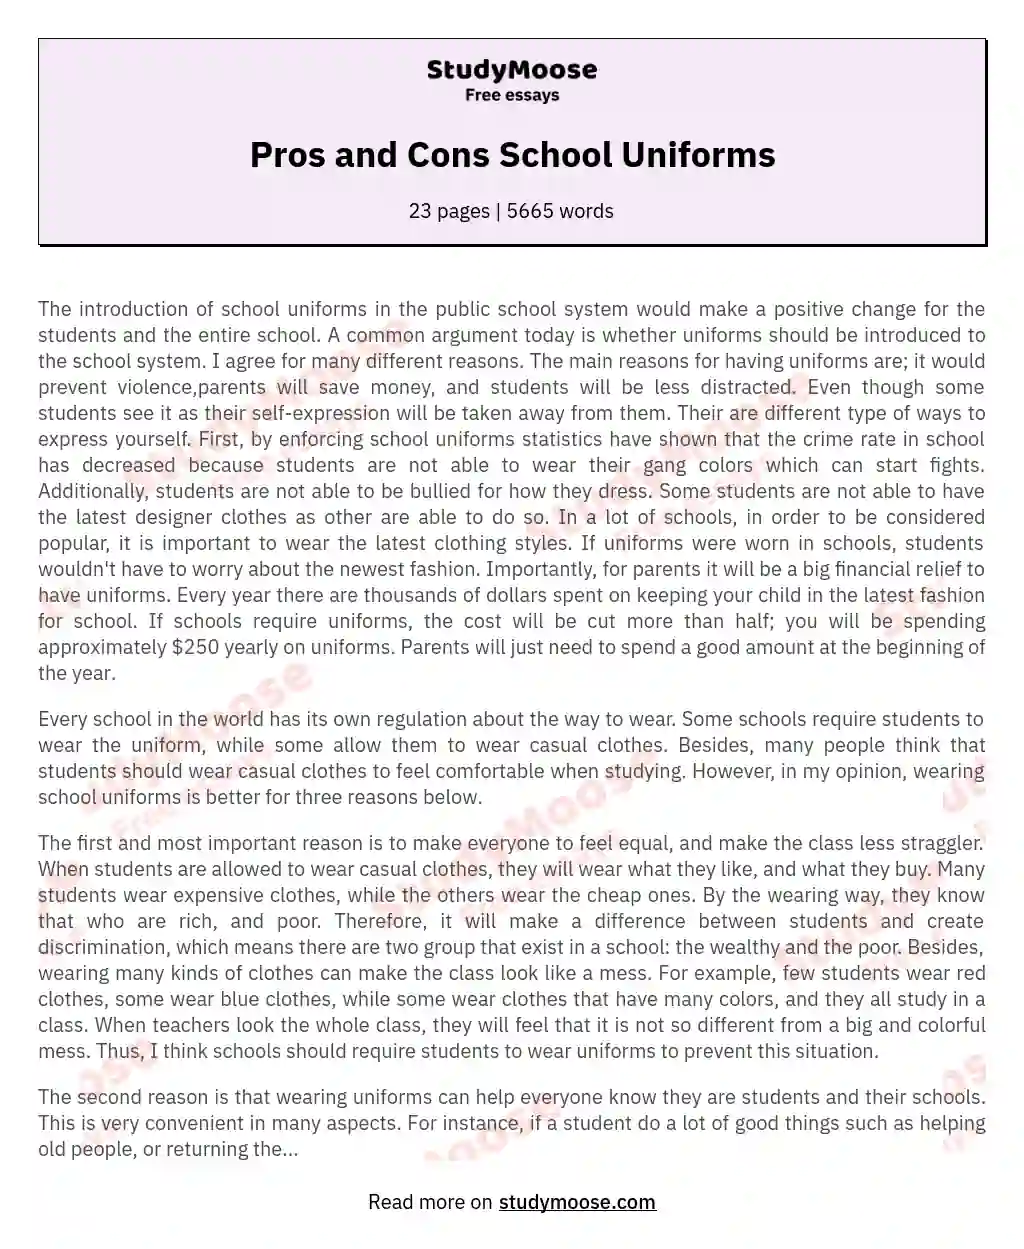 Pros and Cons School Uniforms essay